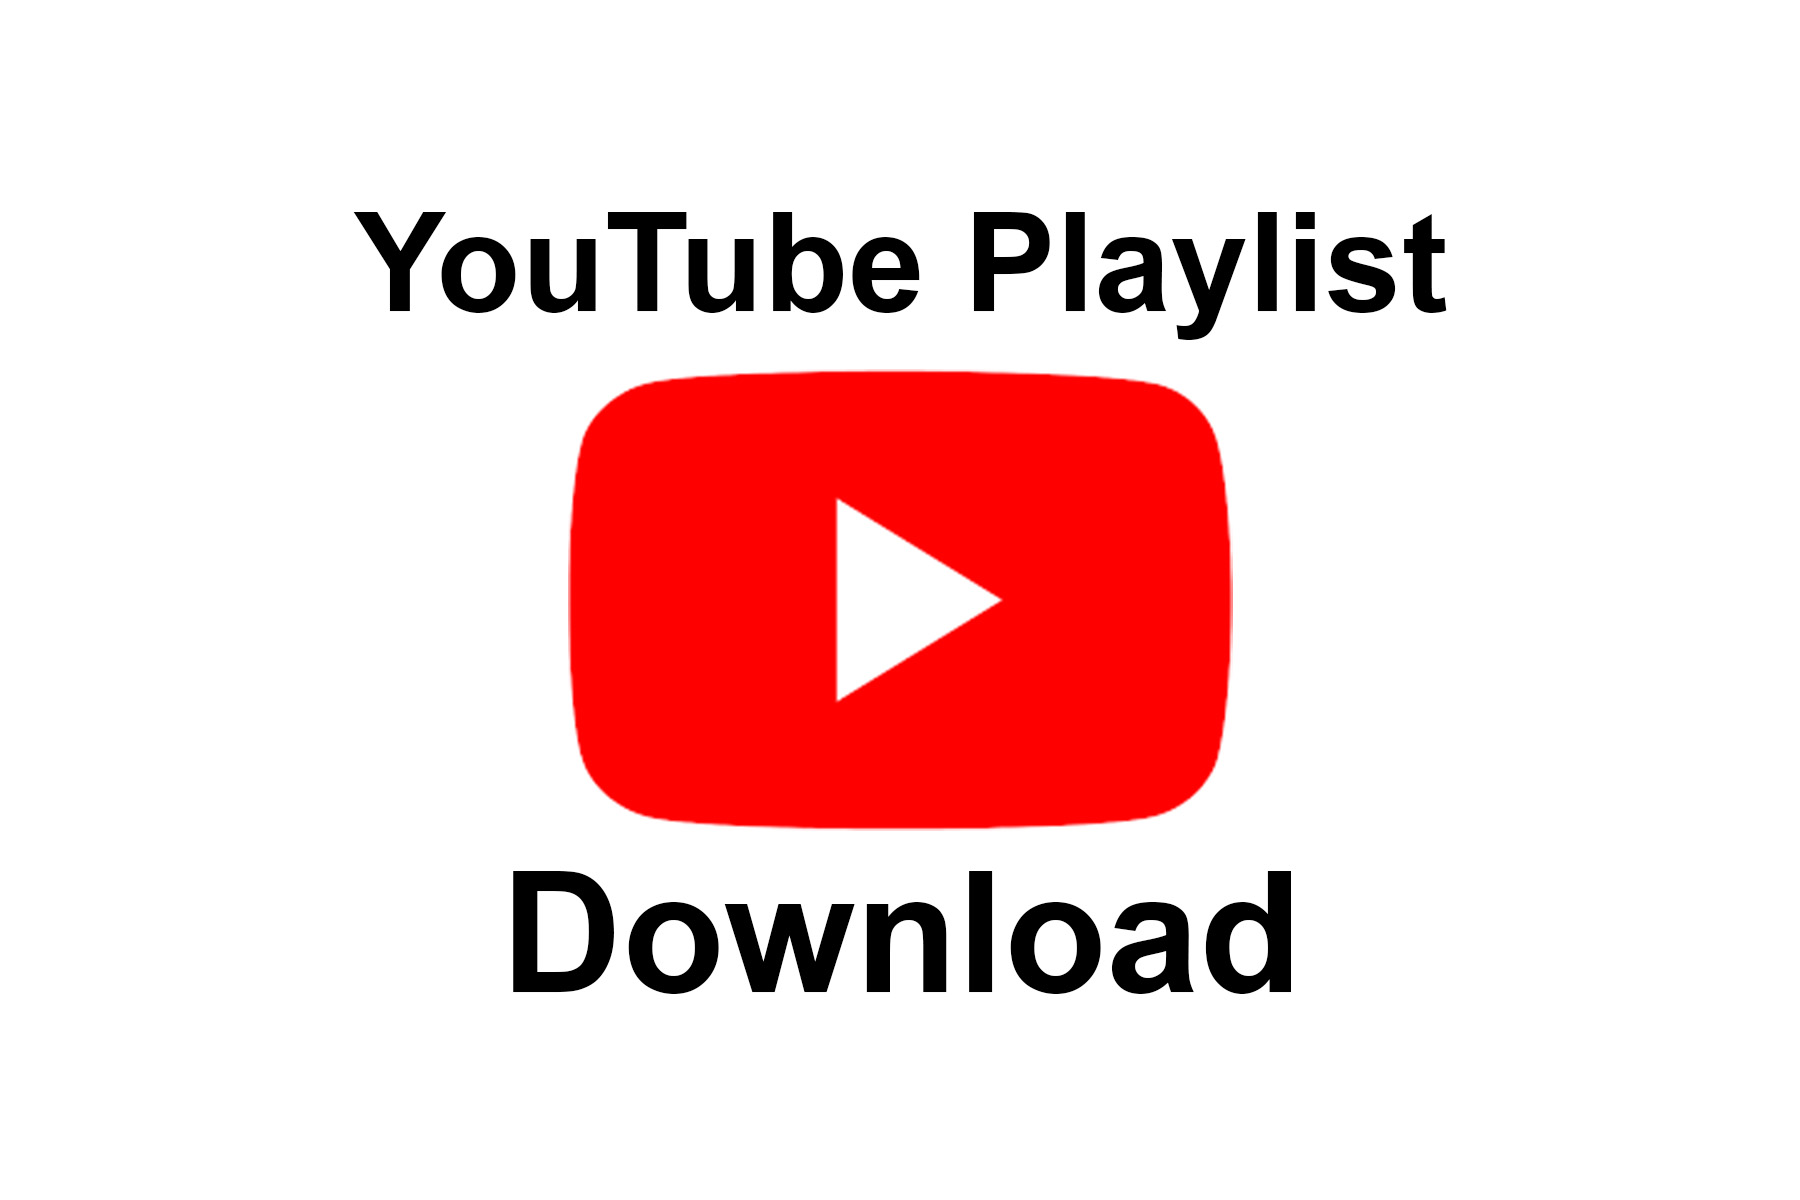 YouTube Playlist এর সবগুলো Video Download করুন কোন প্রকার Software ছাড়াই।